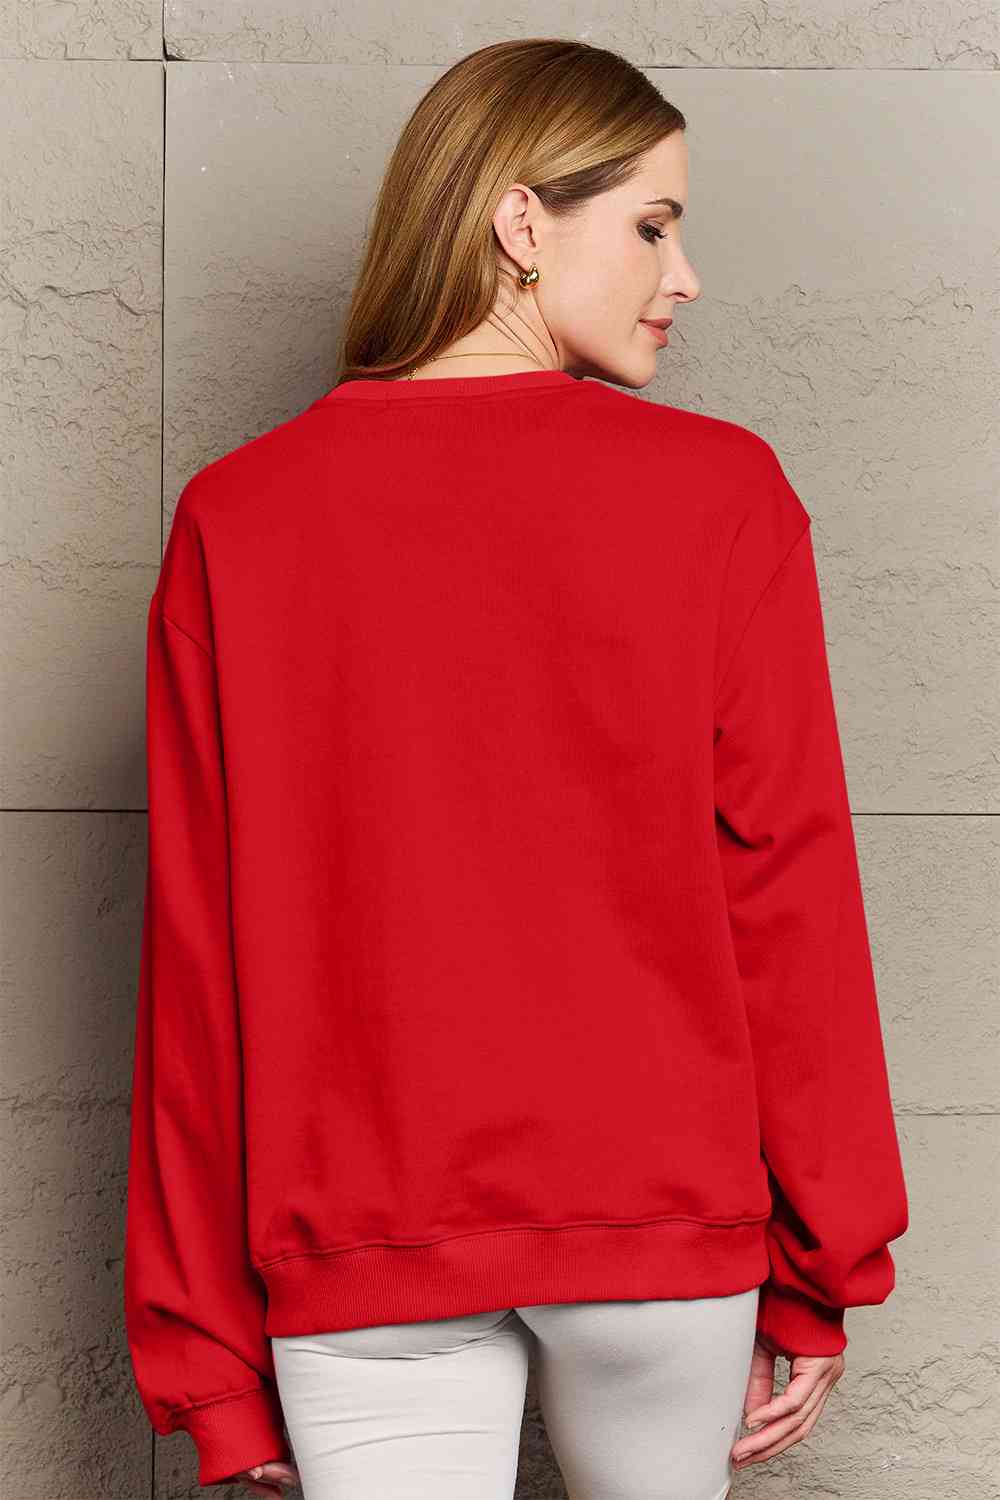 Full Size WINTER WONDERLAND ALUMNI Graphic Long Sleeve Sweatshirt